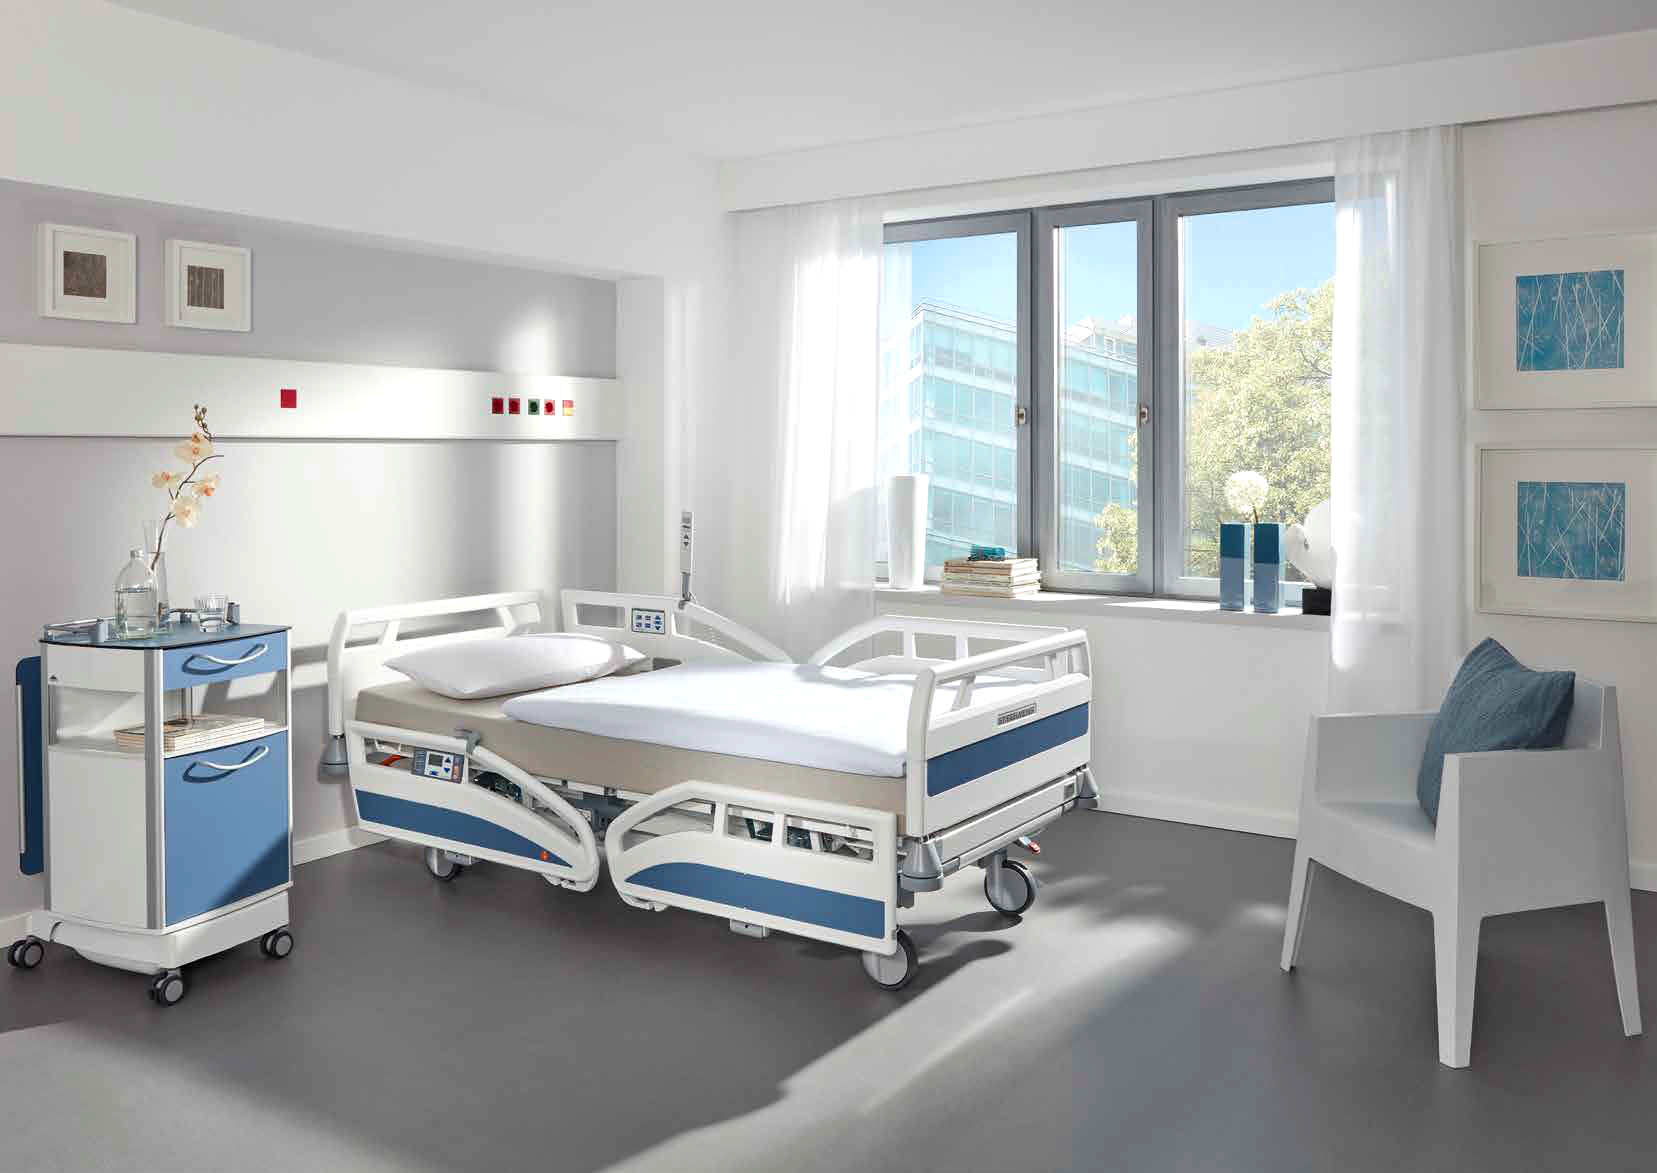 Stiegelmeyer Evario Hospital Bed